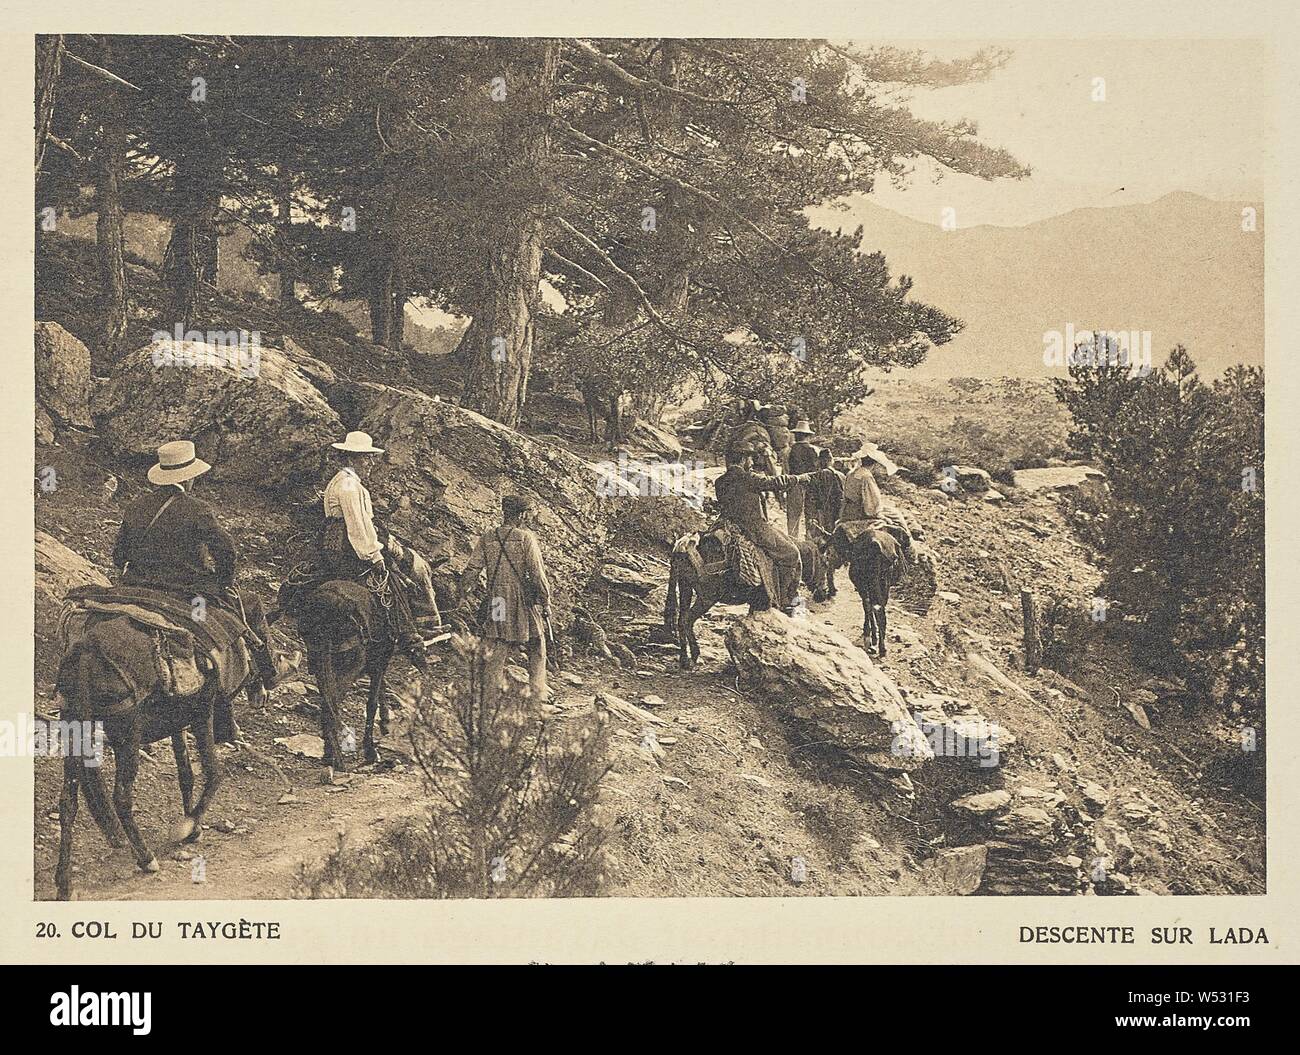 Col du Taygète. Descente sur Lada, Frédéric Boissonnas (Svizzera, 1858 - 1946), Ginevra, Svizzera, 1910, Heliogravure / Photolithograph, 9,9 × 14,1 cm (3 7/8 x 5 9/16 in Foto Stock